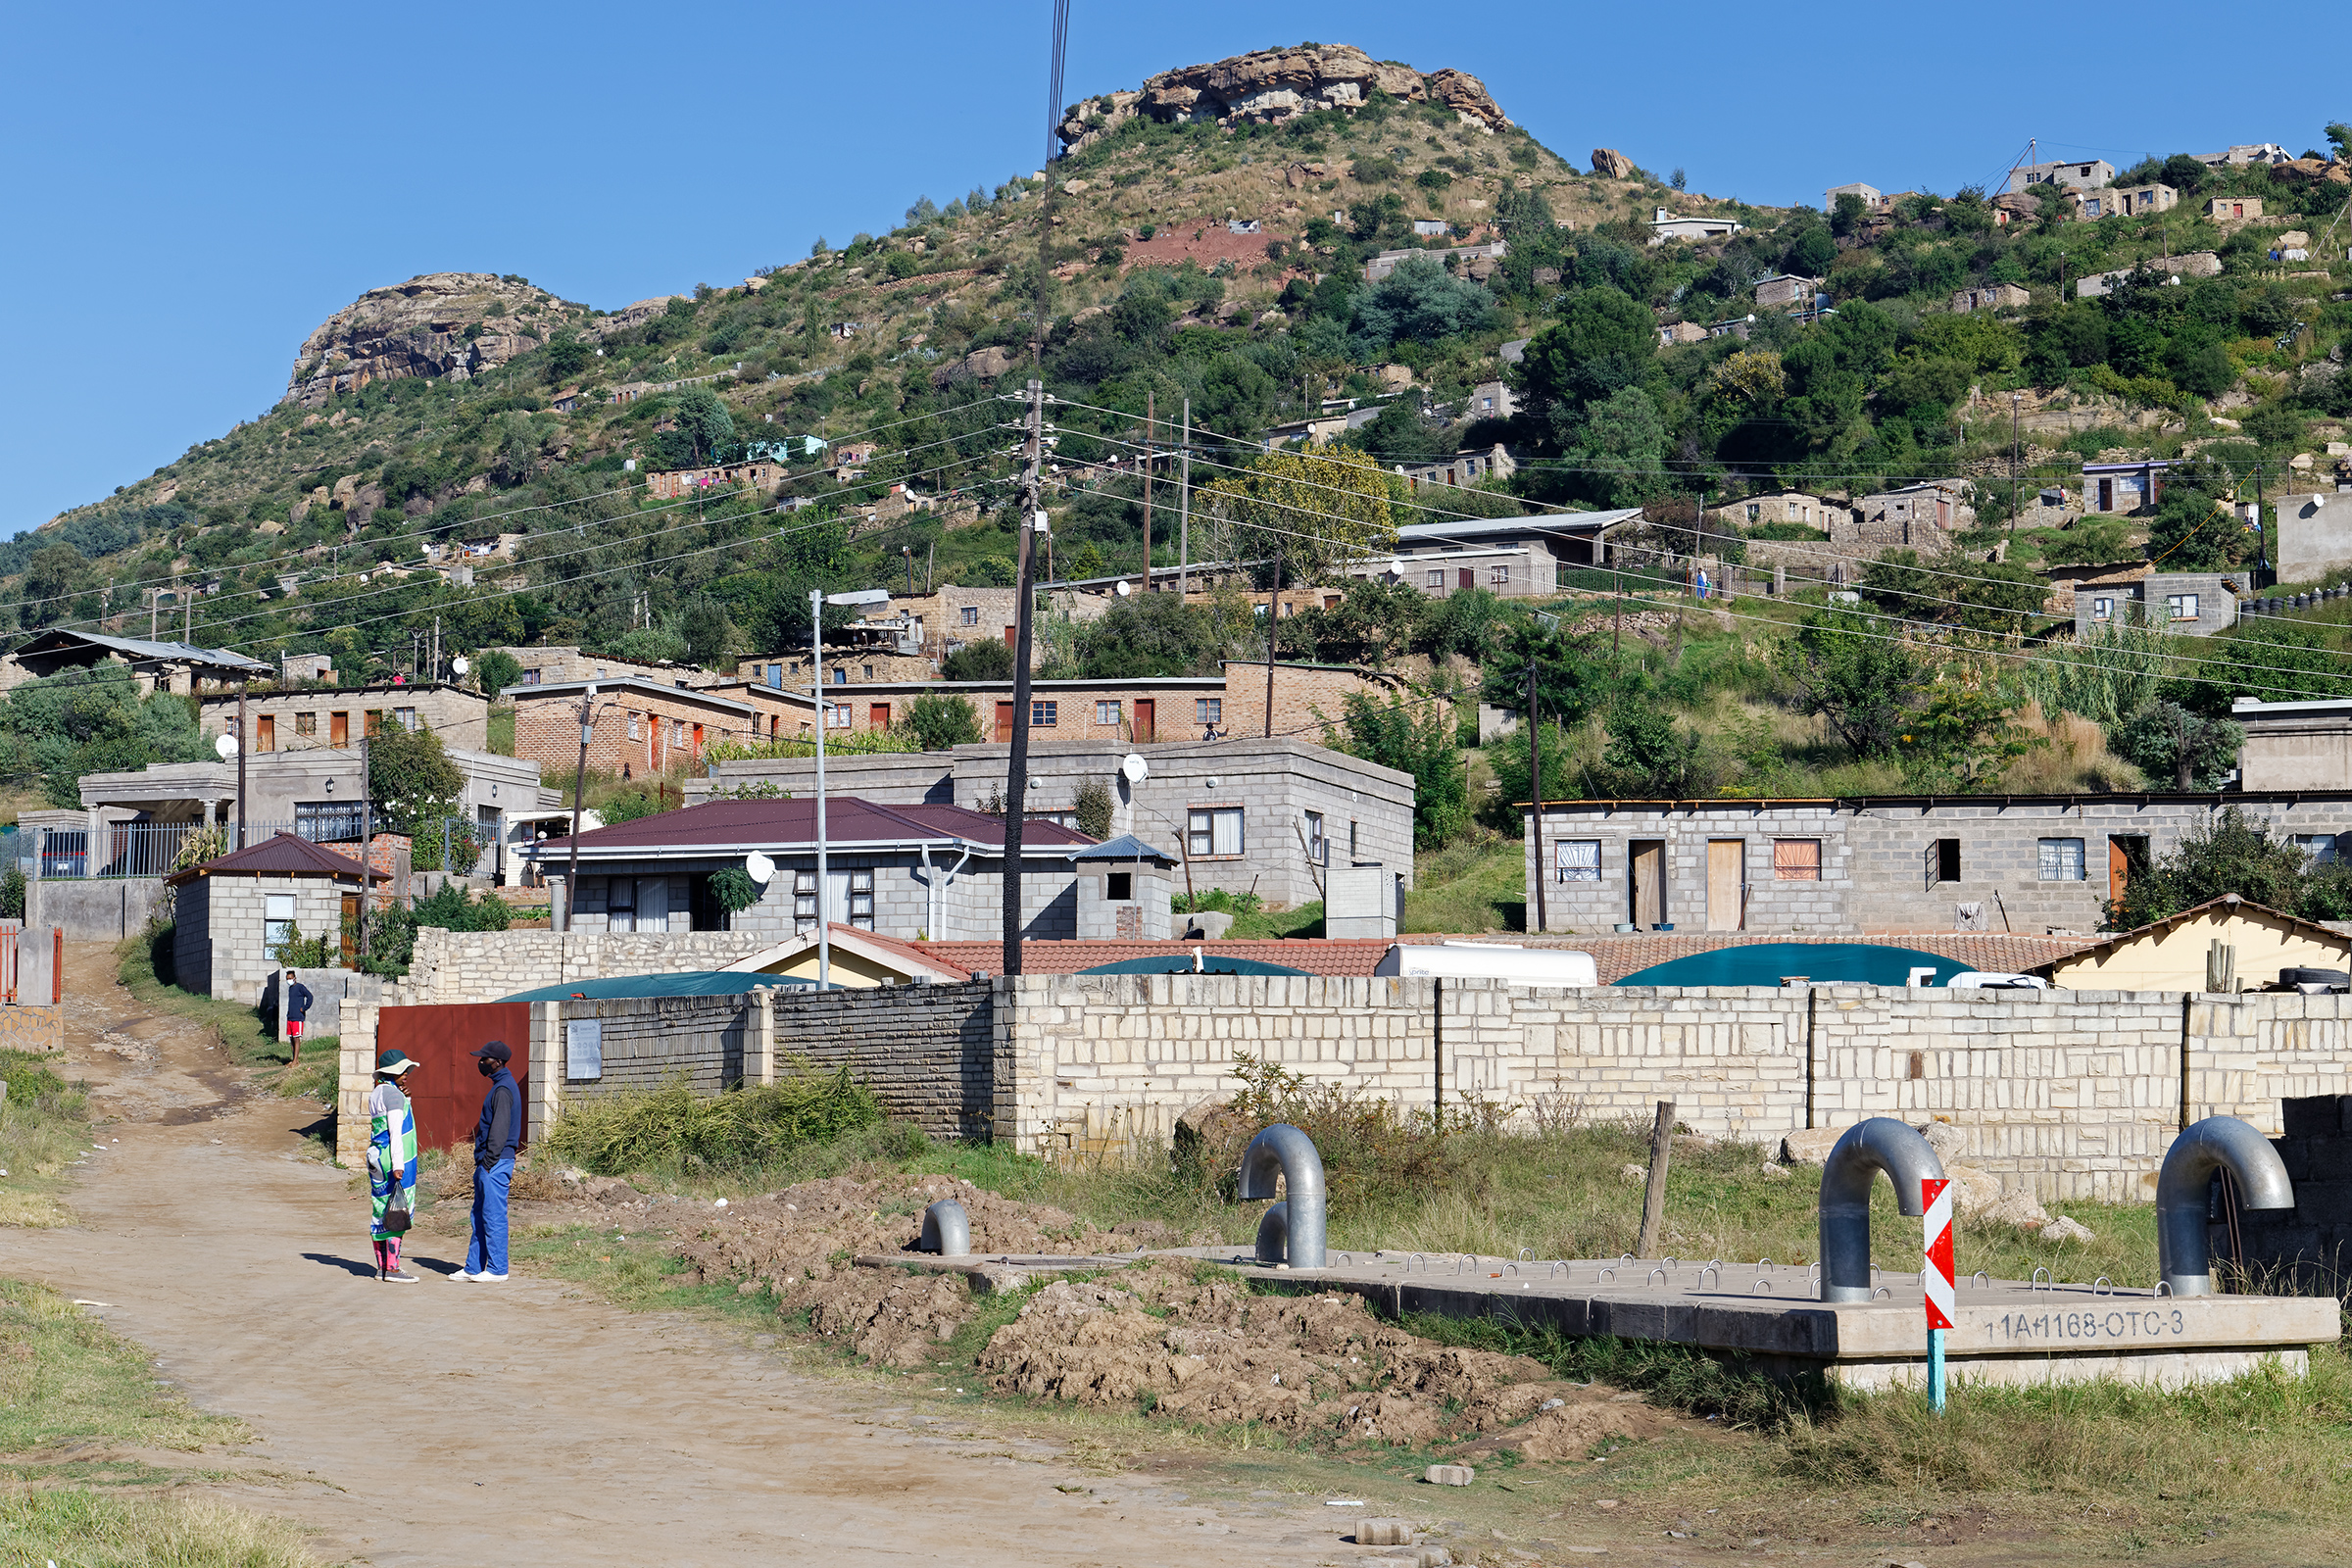 A scene from Maseru Lesotho